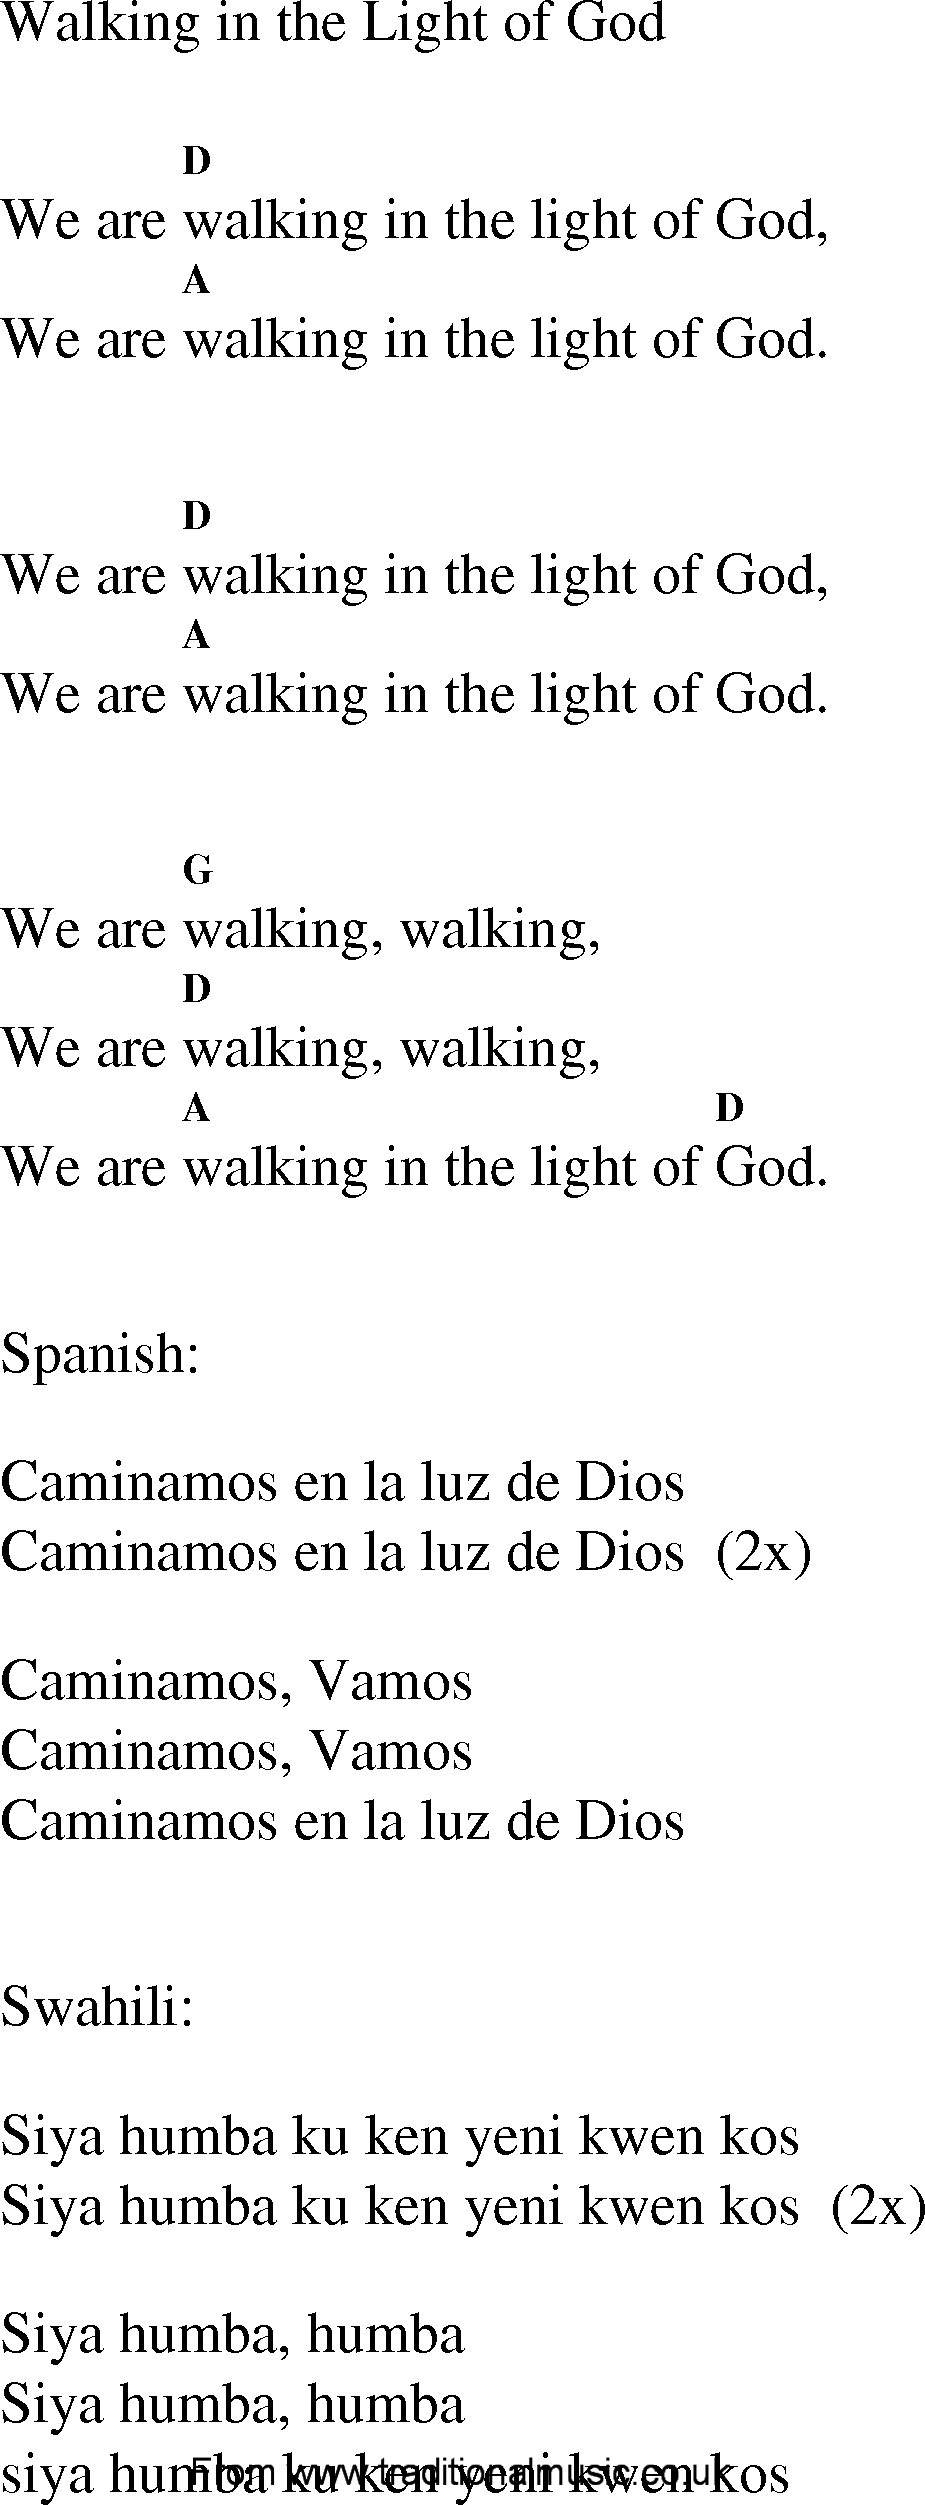 Gospel Song: walking_in_the_light_of_god, lyrics and chords.